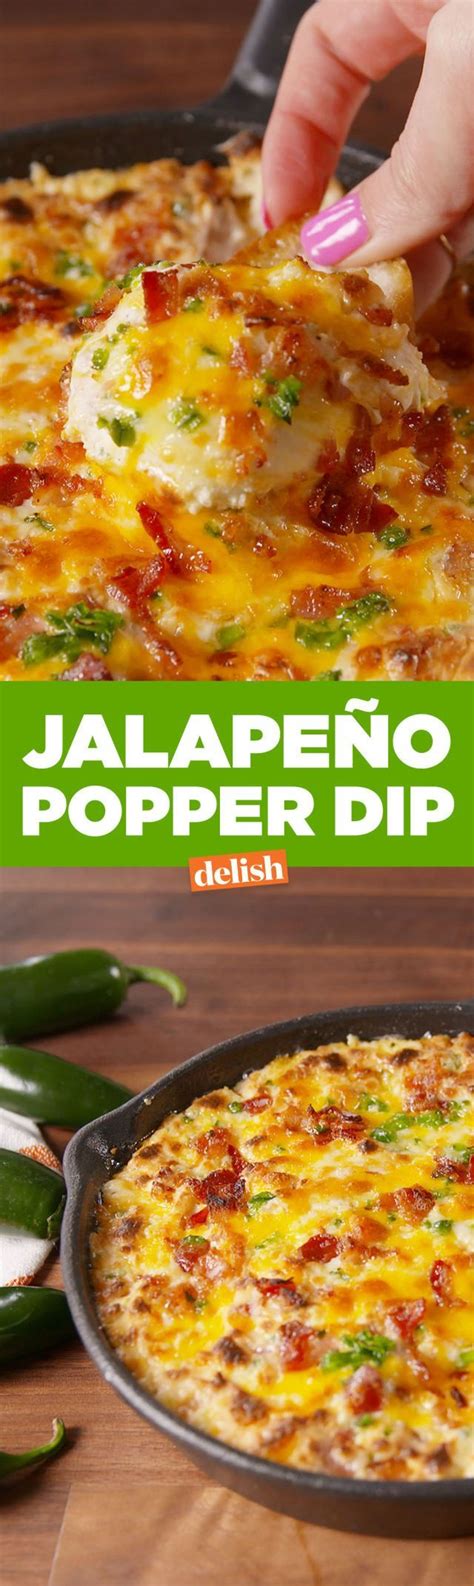 Best Jalapeño Popper Dip How To Make Jalapeño Popper Dip Party Food